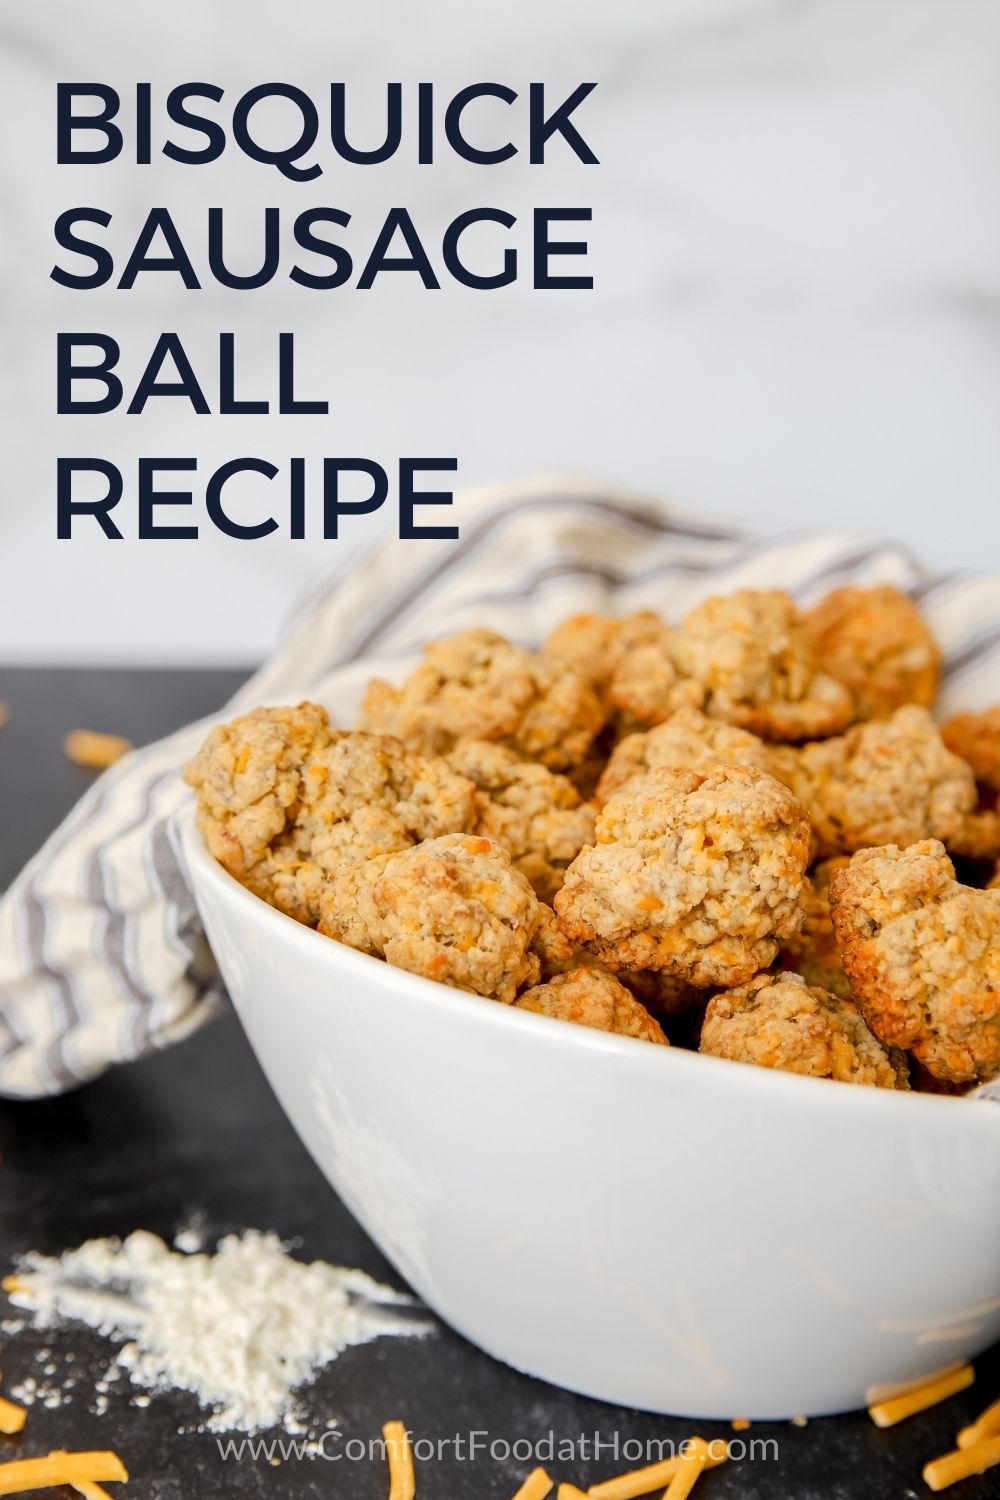 Bisquick Sausage Ball Recipe